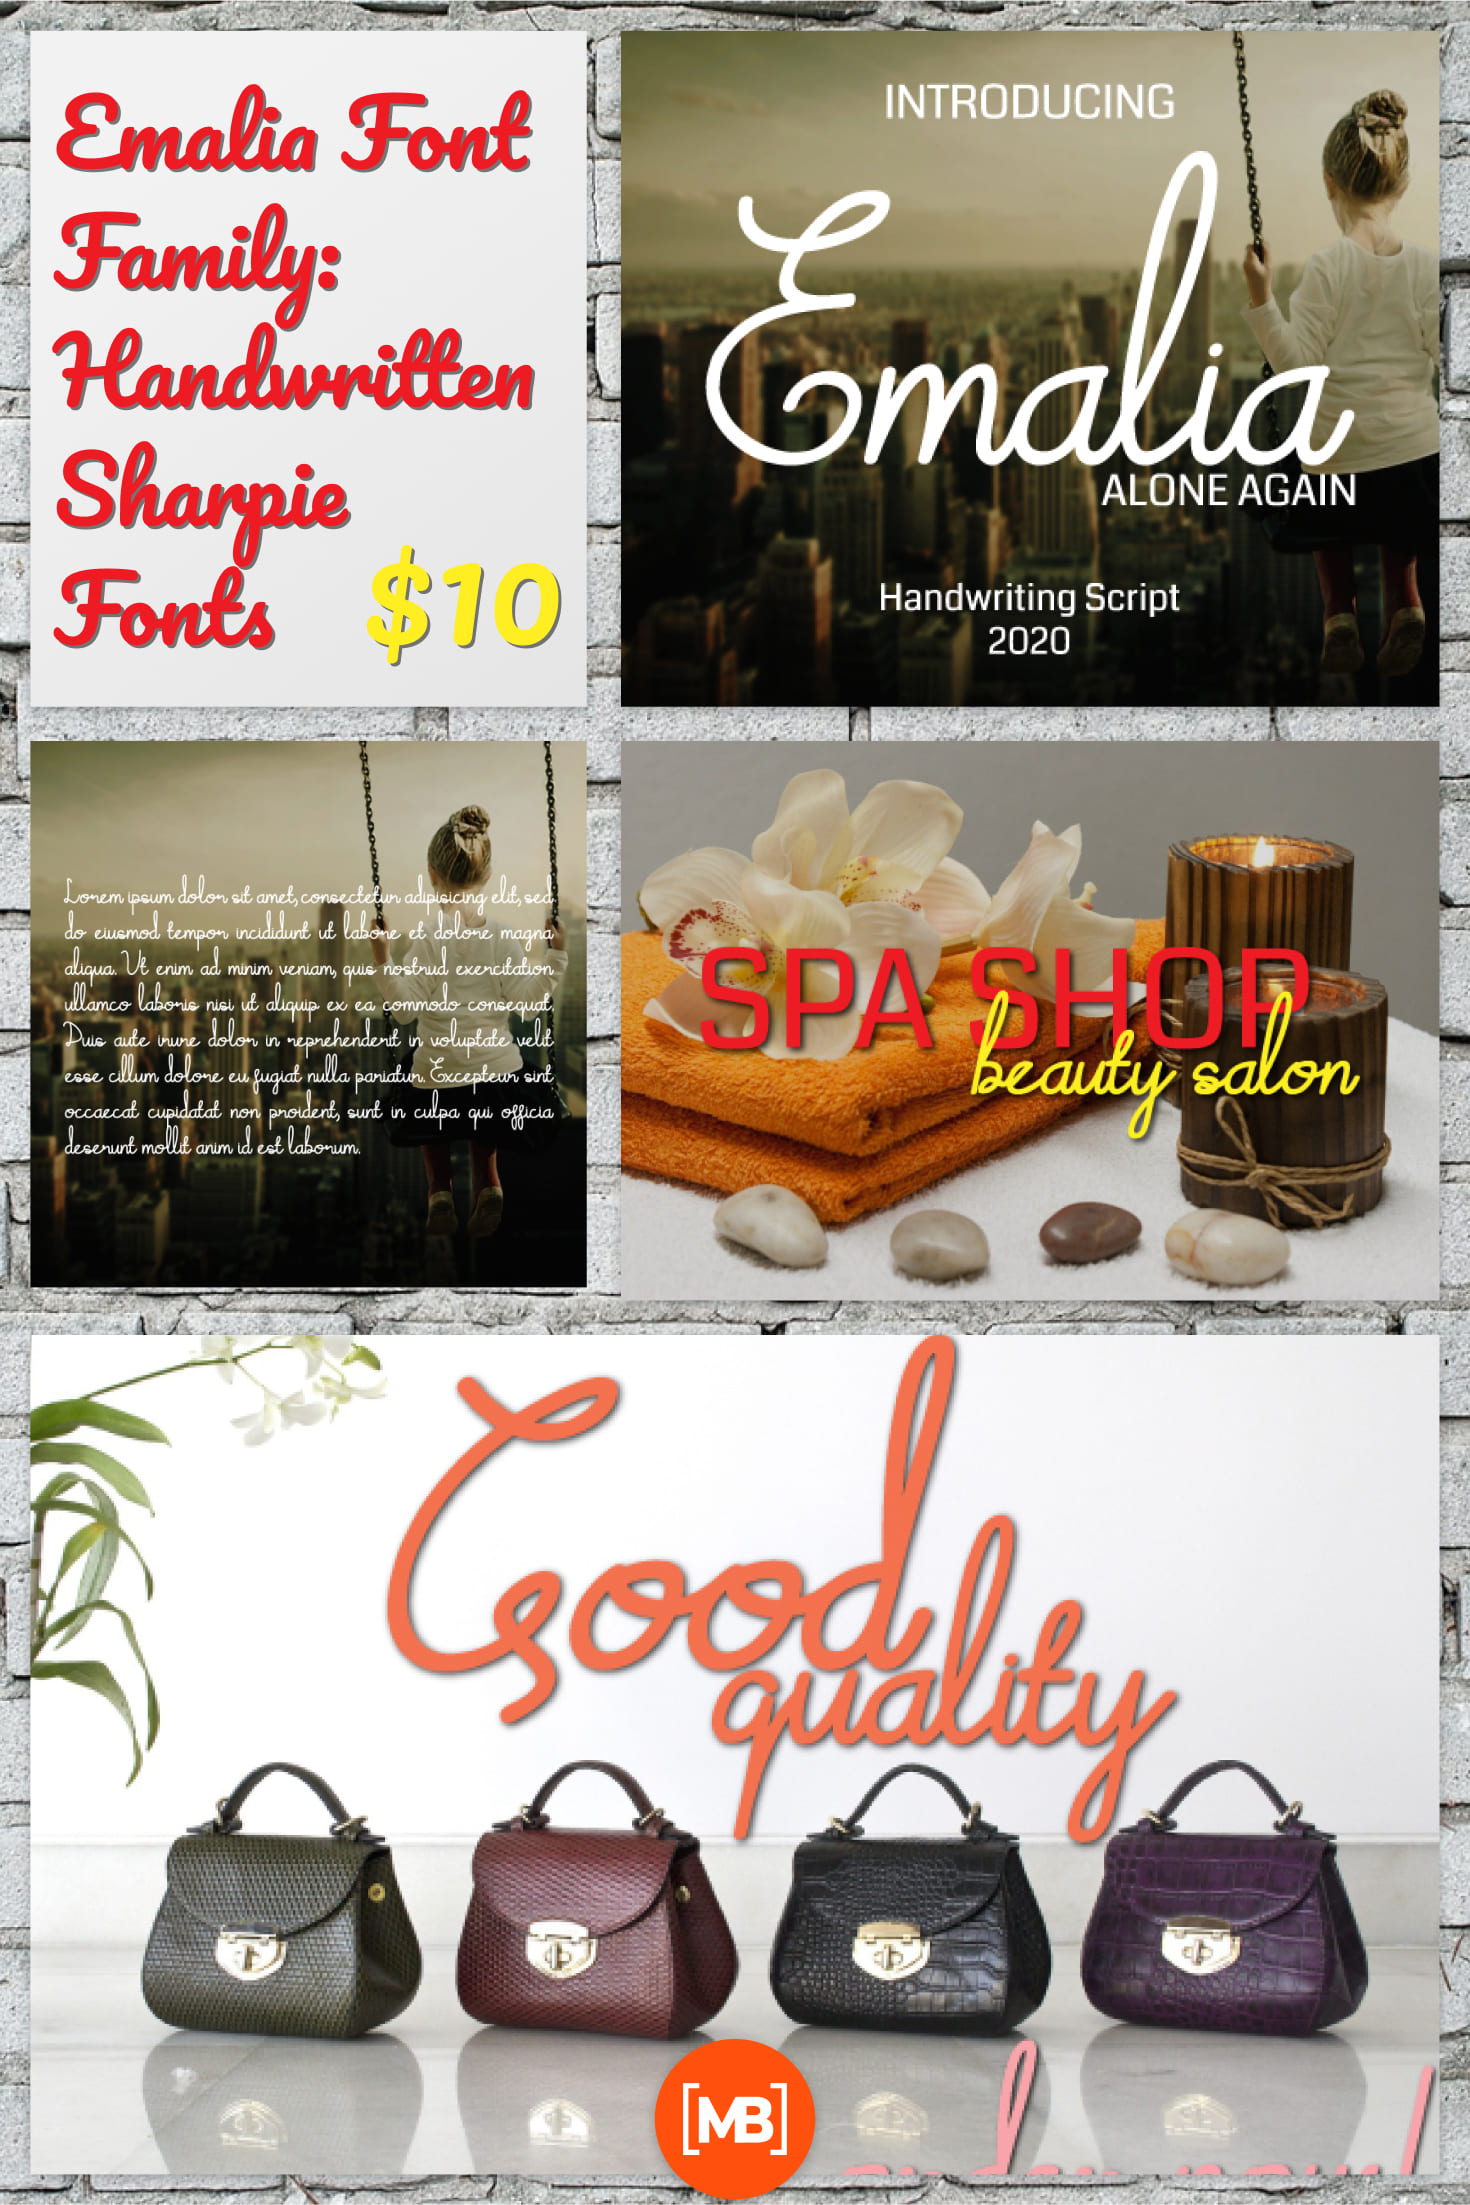 Pinterest Image: Emalia Font Family: Handwritten Sharpie Fonts.